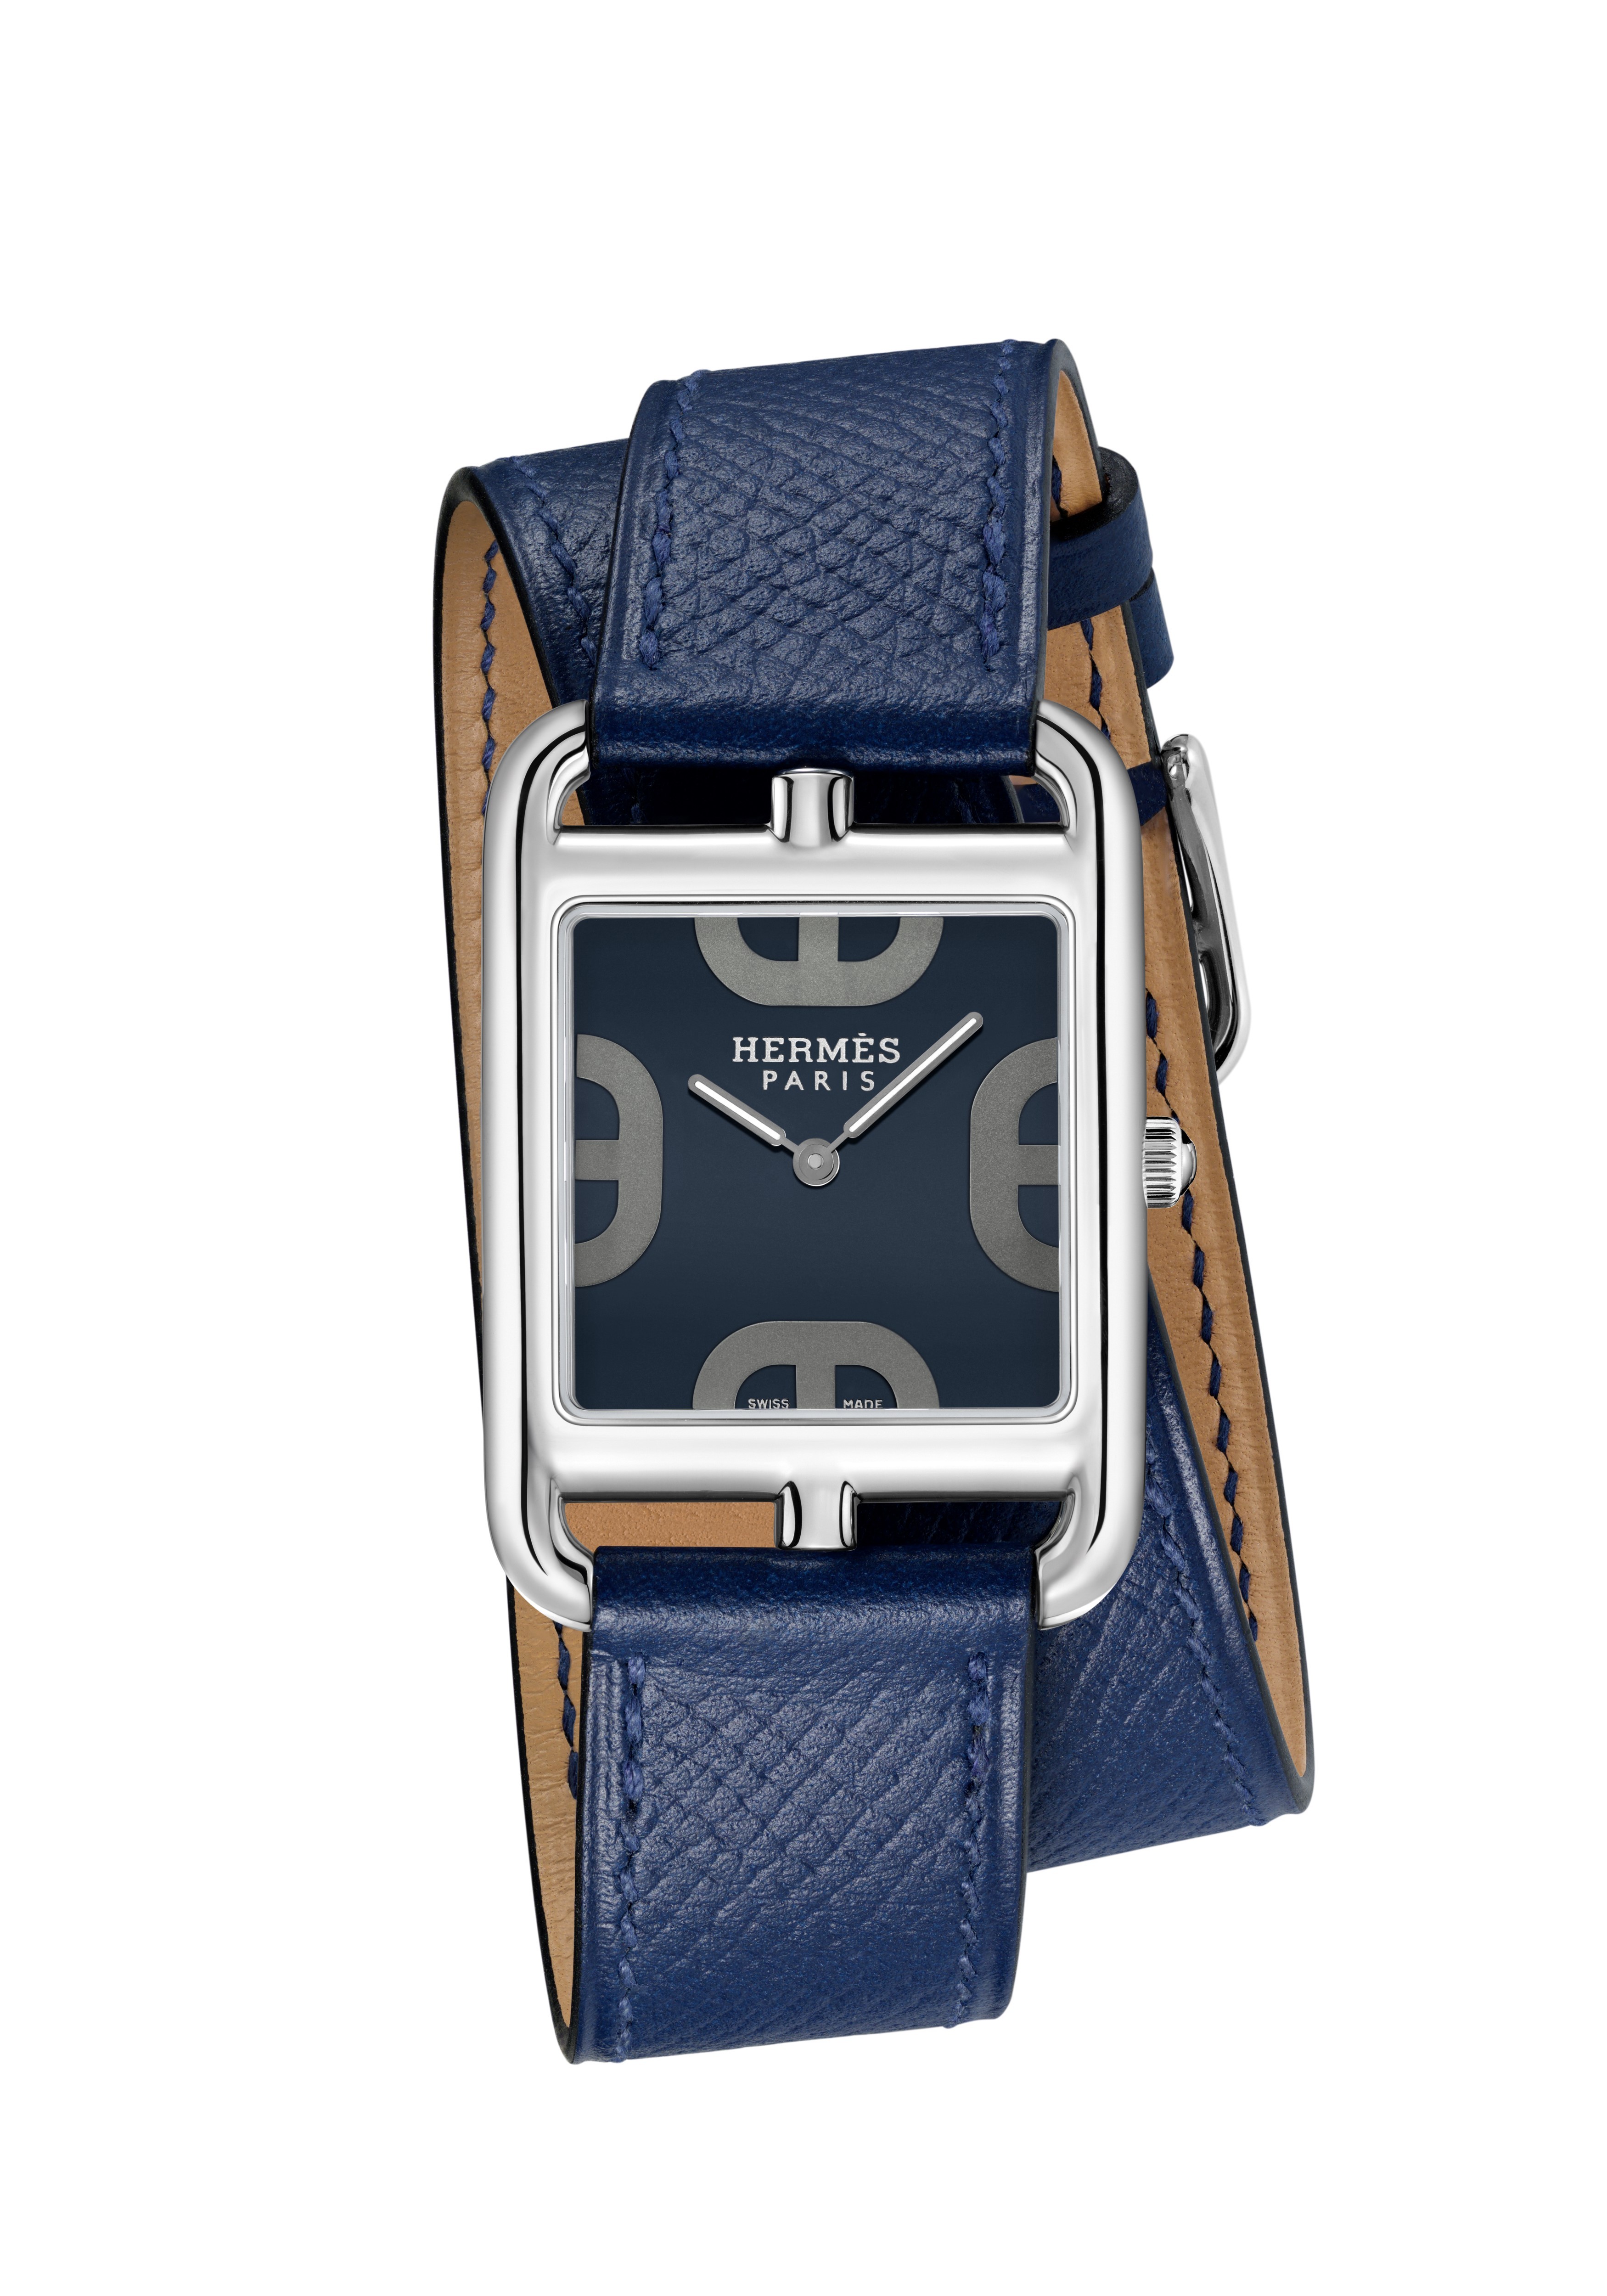 Hermès Cape Cod’s “Anchor Chain” motif on dial with a double tour Malta blue strap